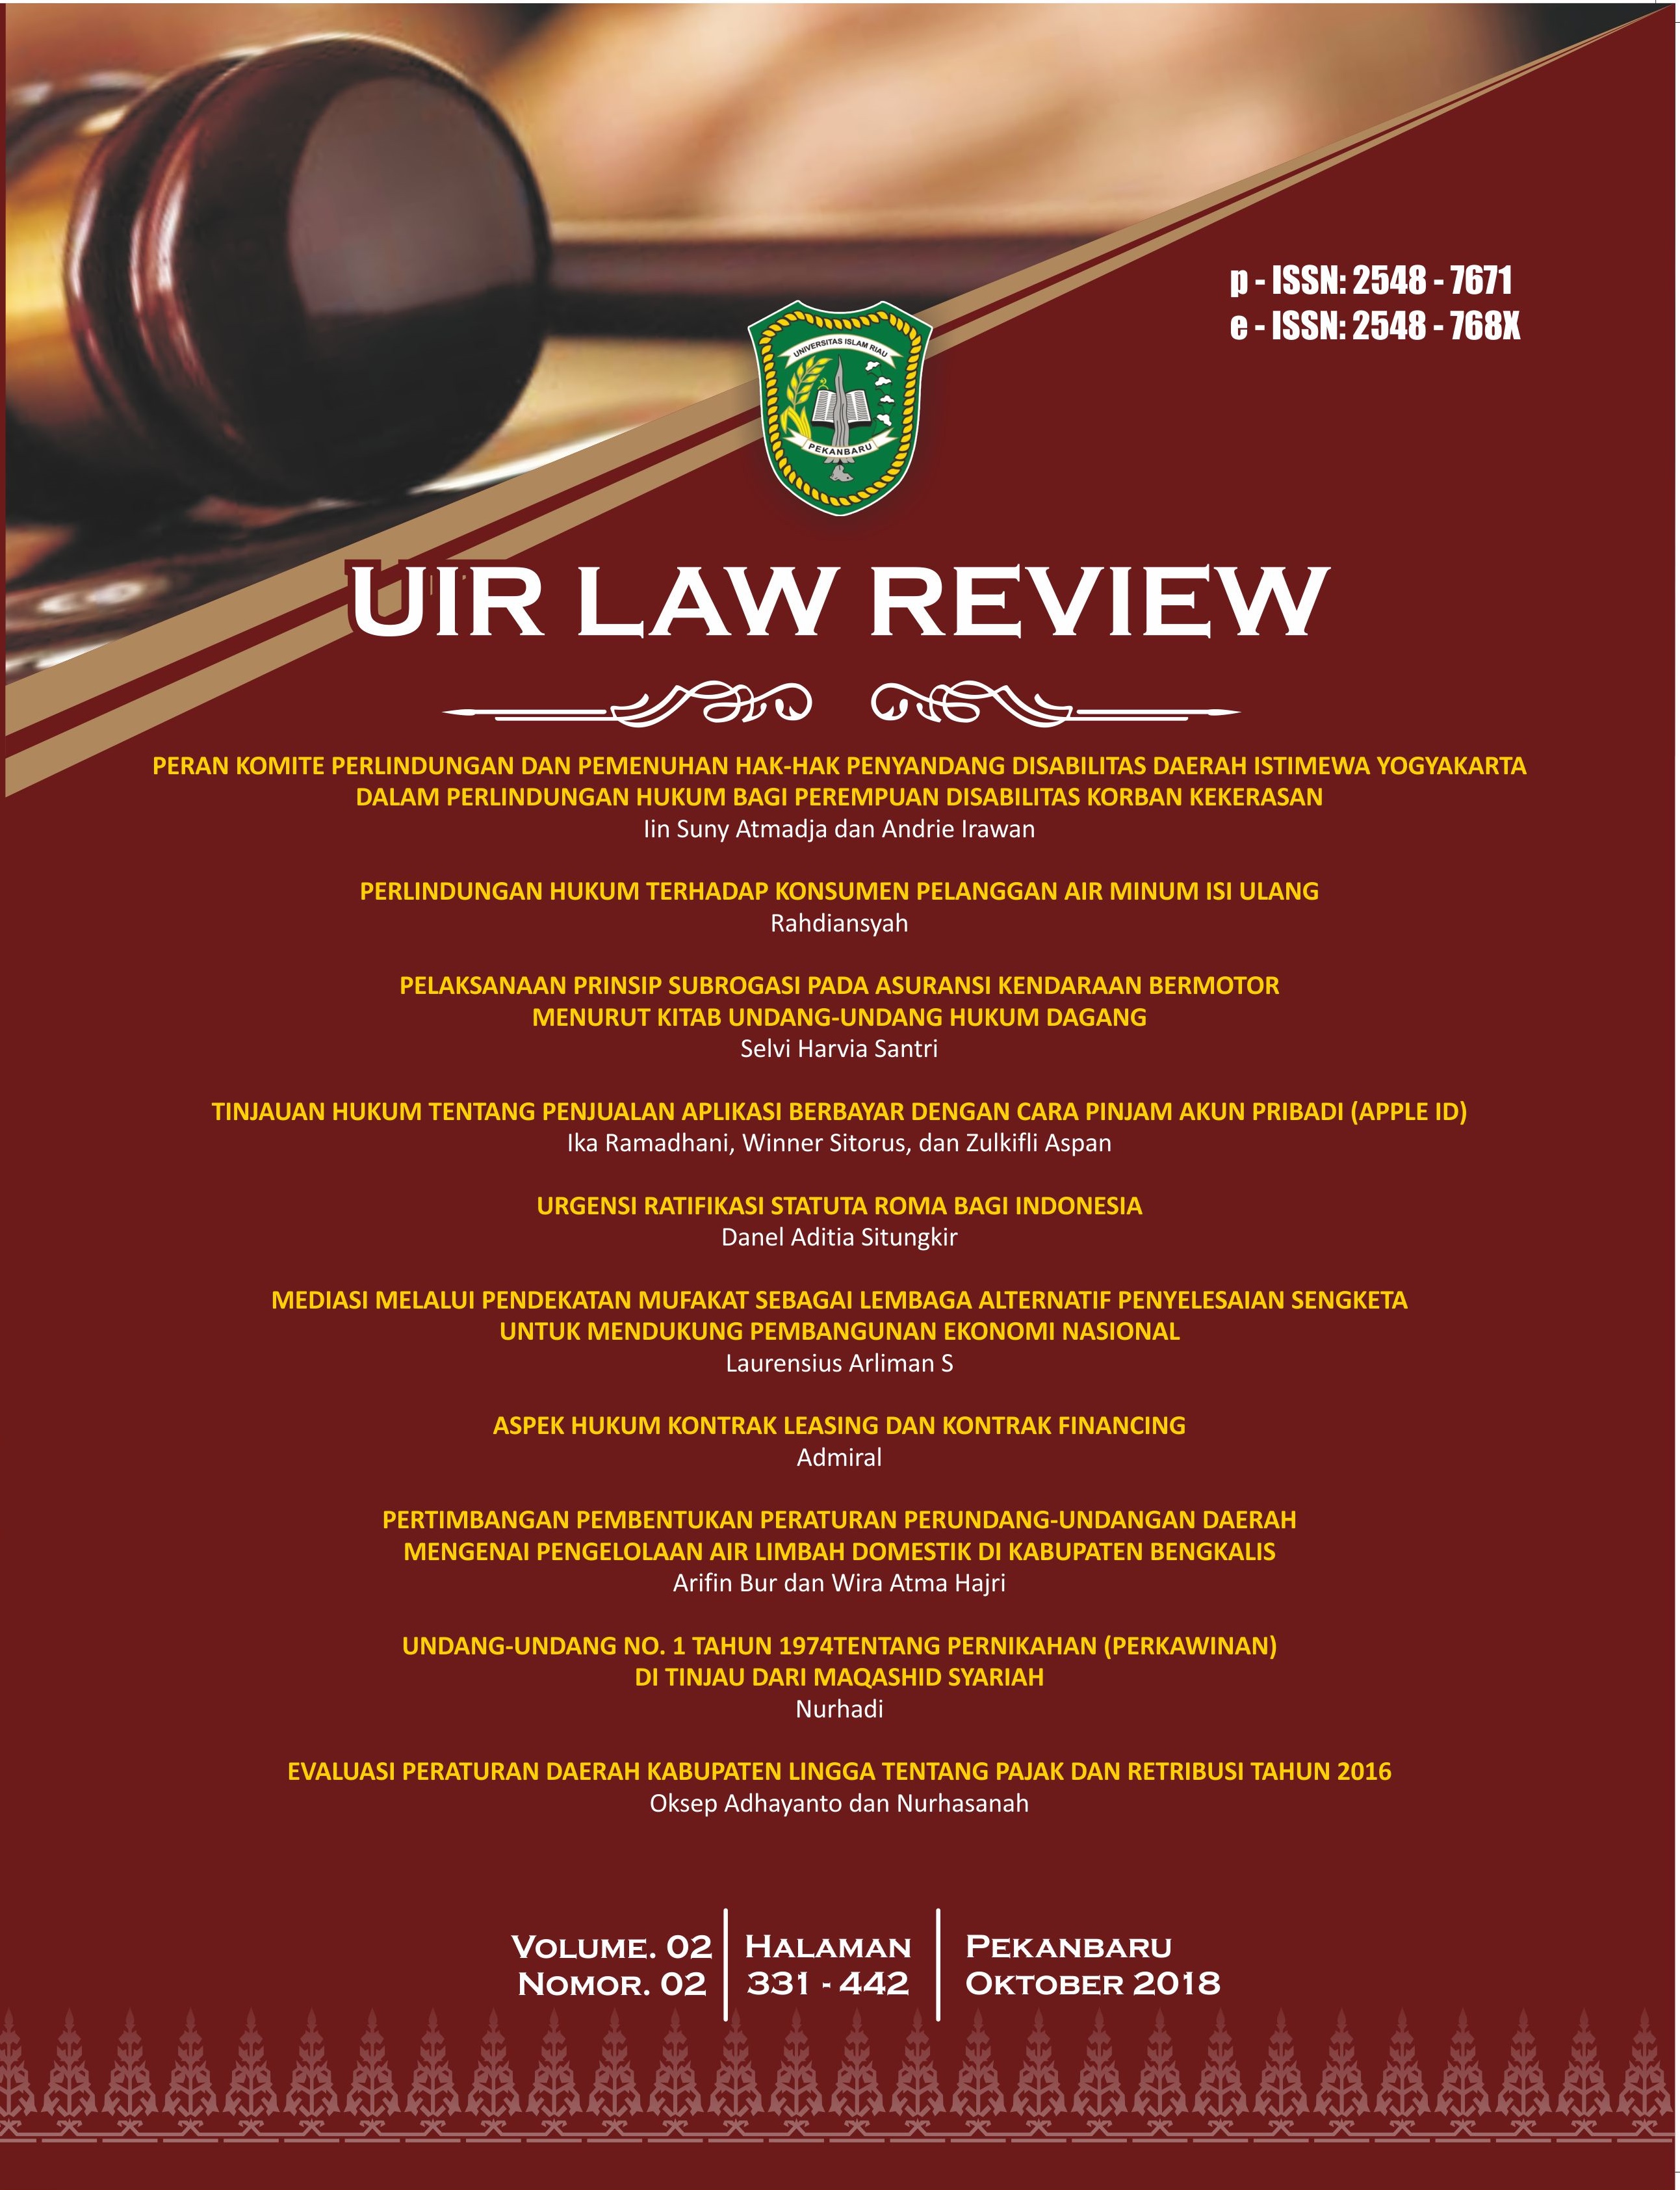 UIR Law Review, Vol. 2, No. 2, Oktober 2018